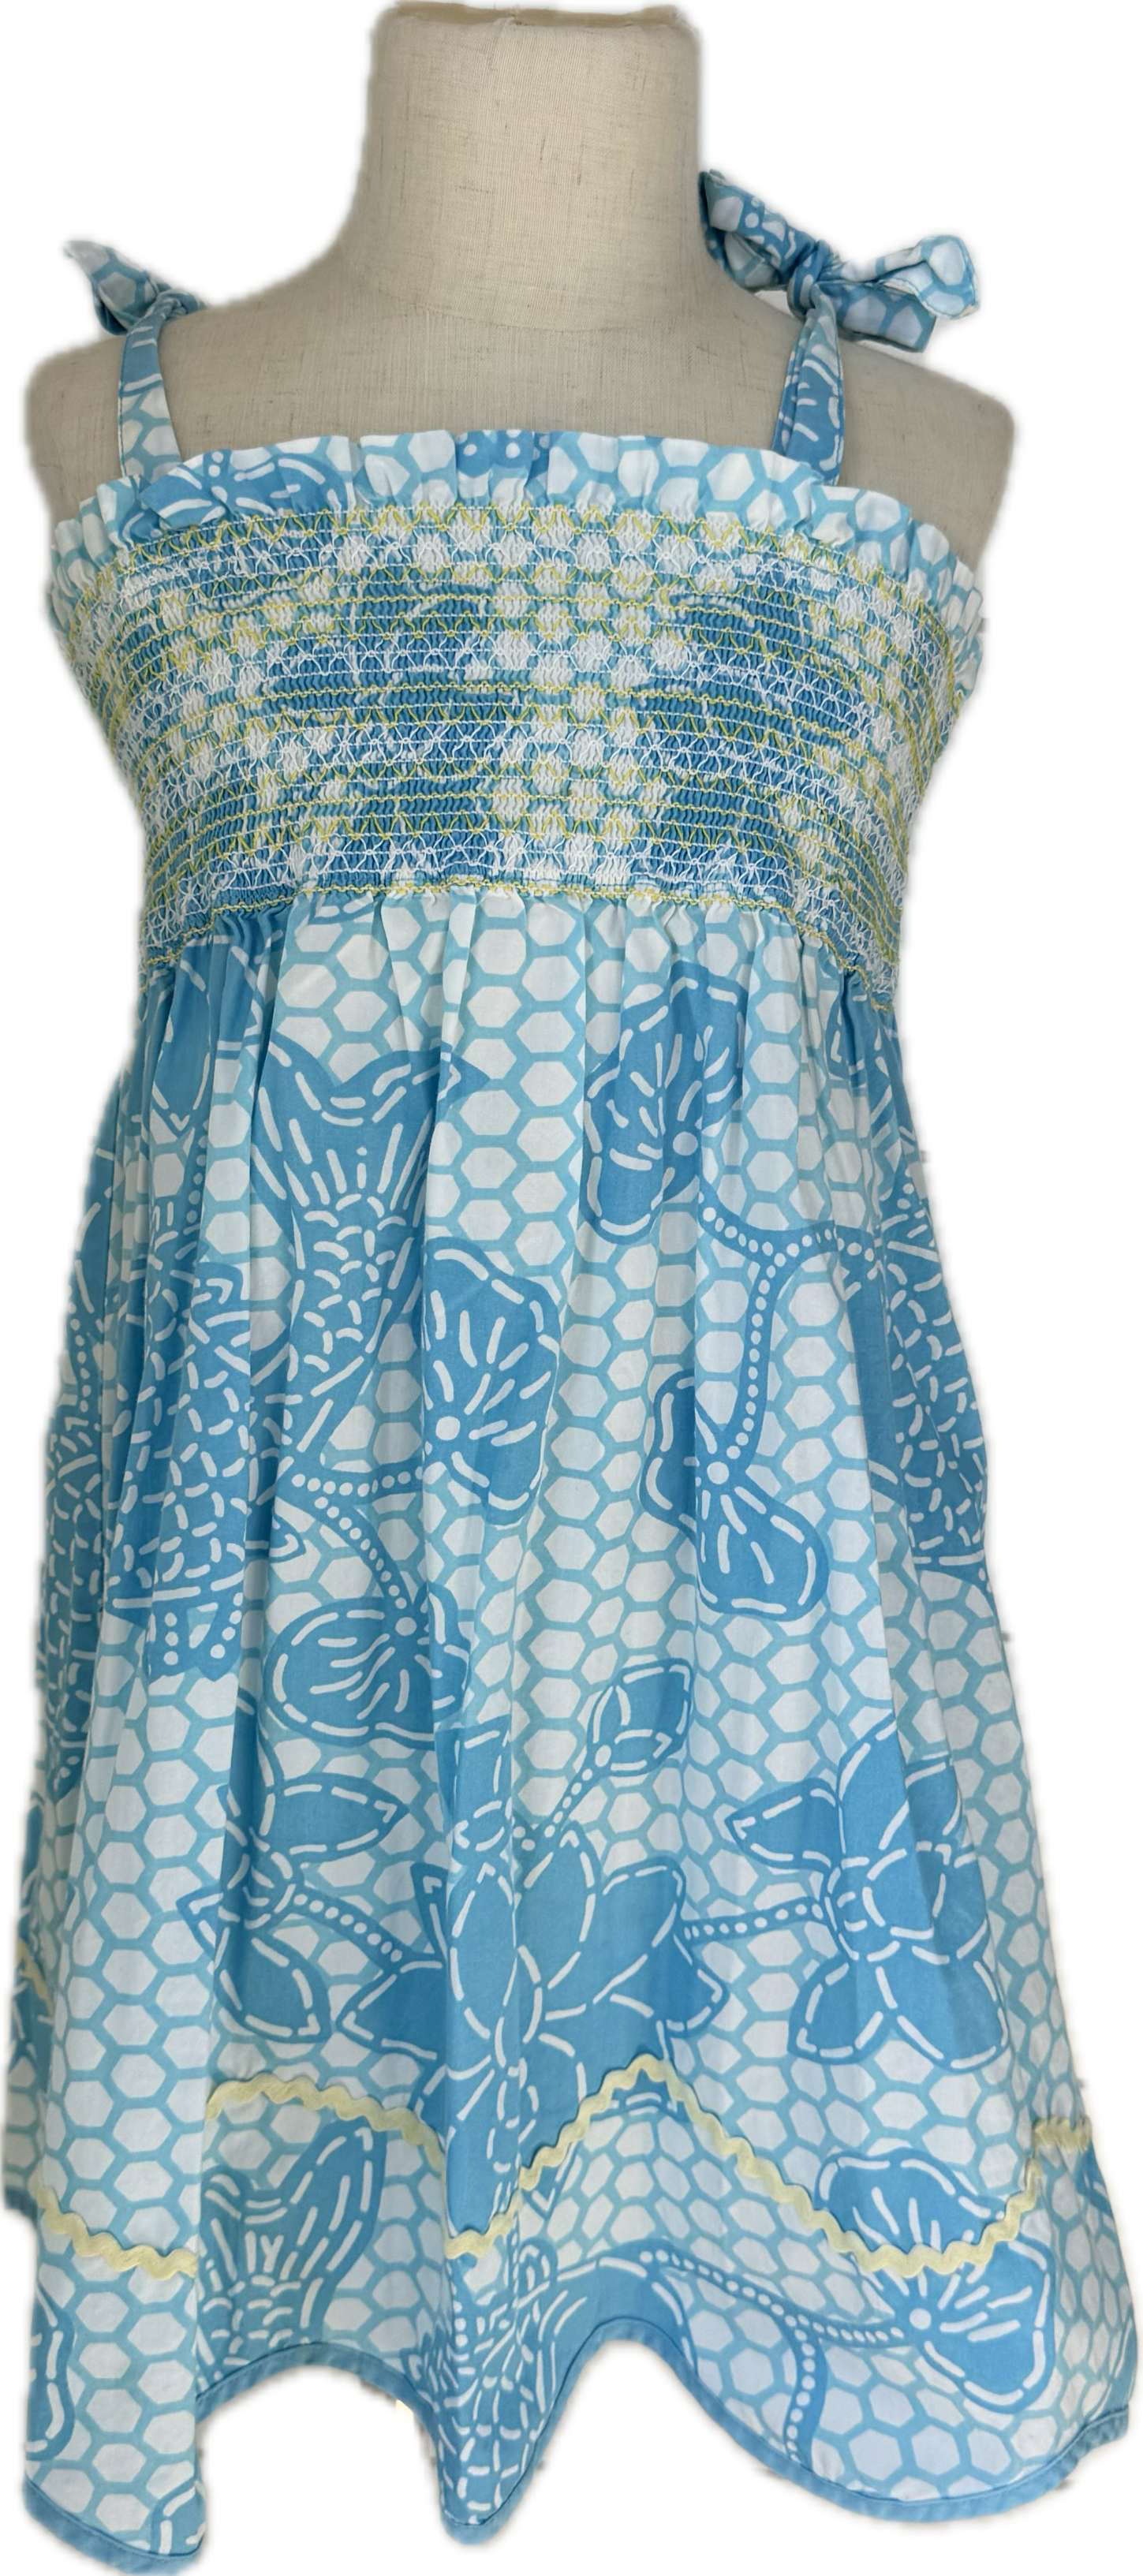 Lilly Pulitzer Smocked Dress, Blue/White Girls Size 5